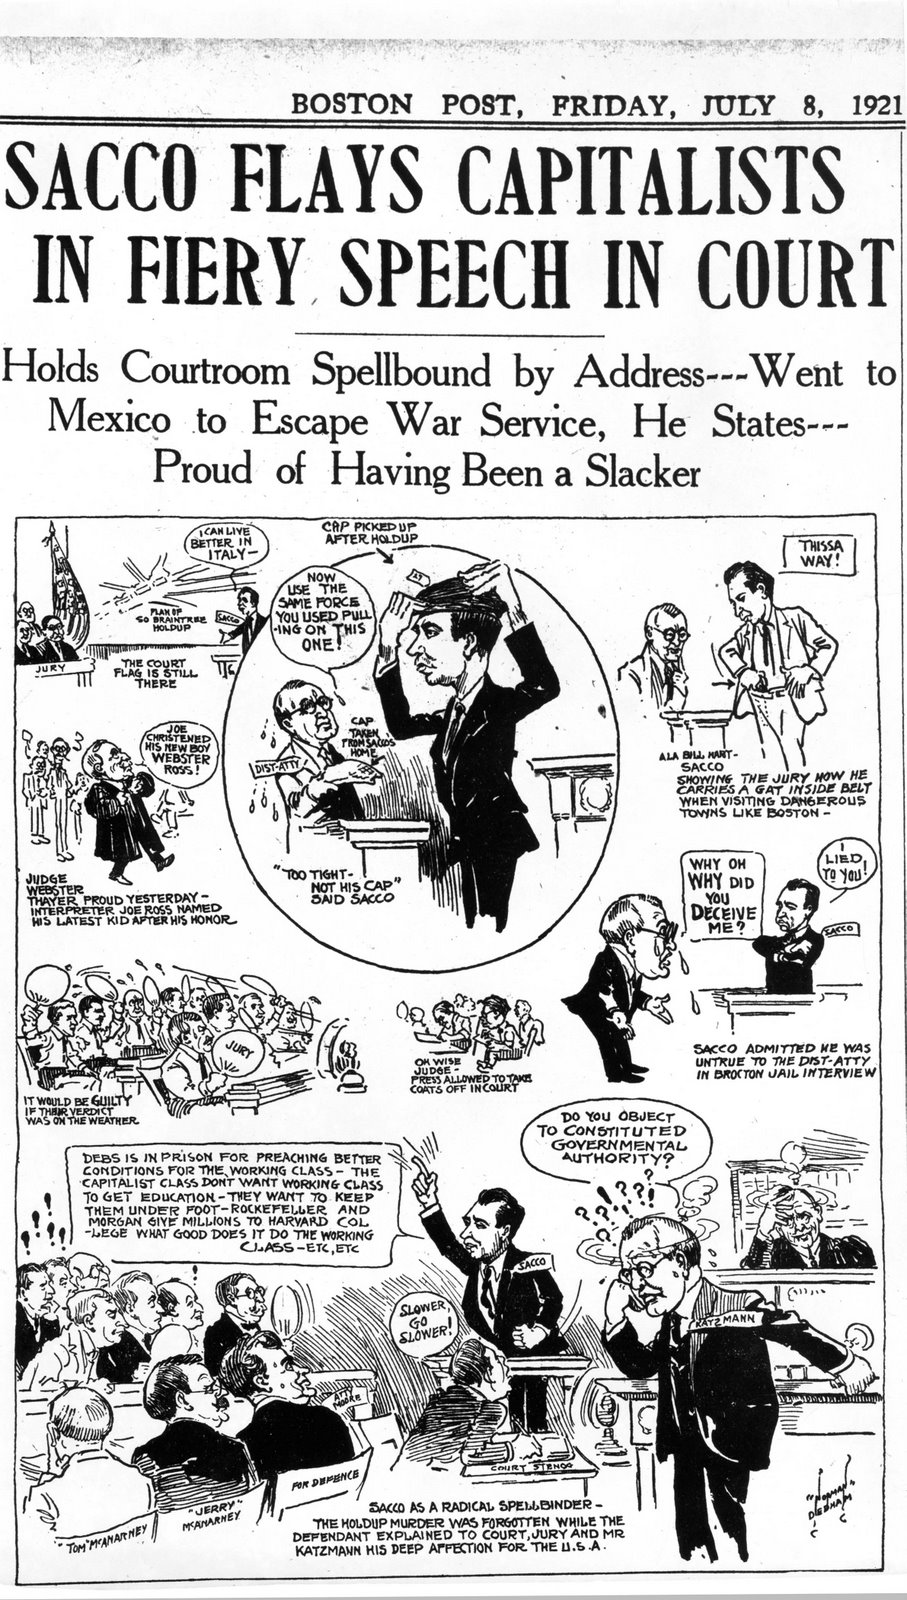 July 8, 1921 Boston Post newspaper cartoon of Sacco's court address